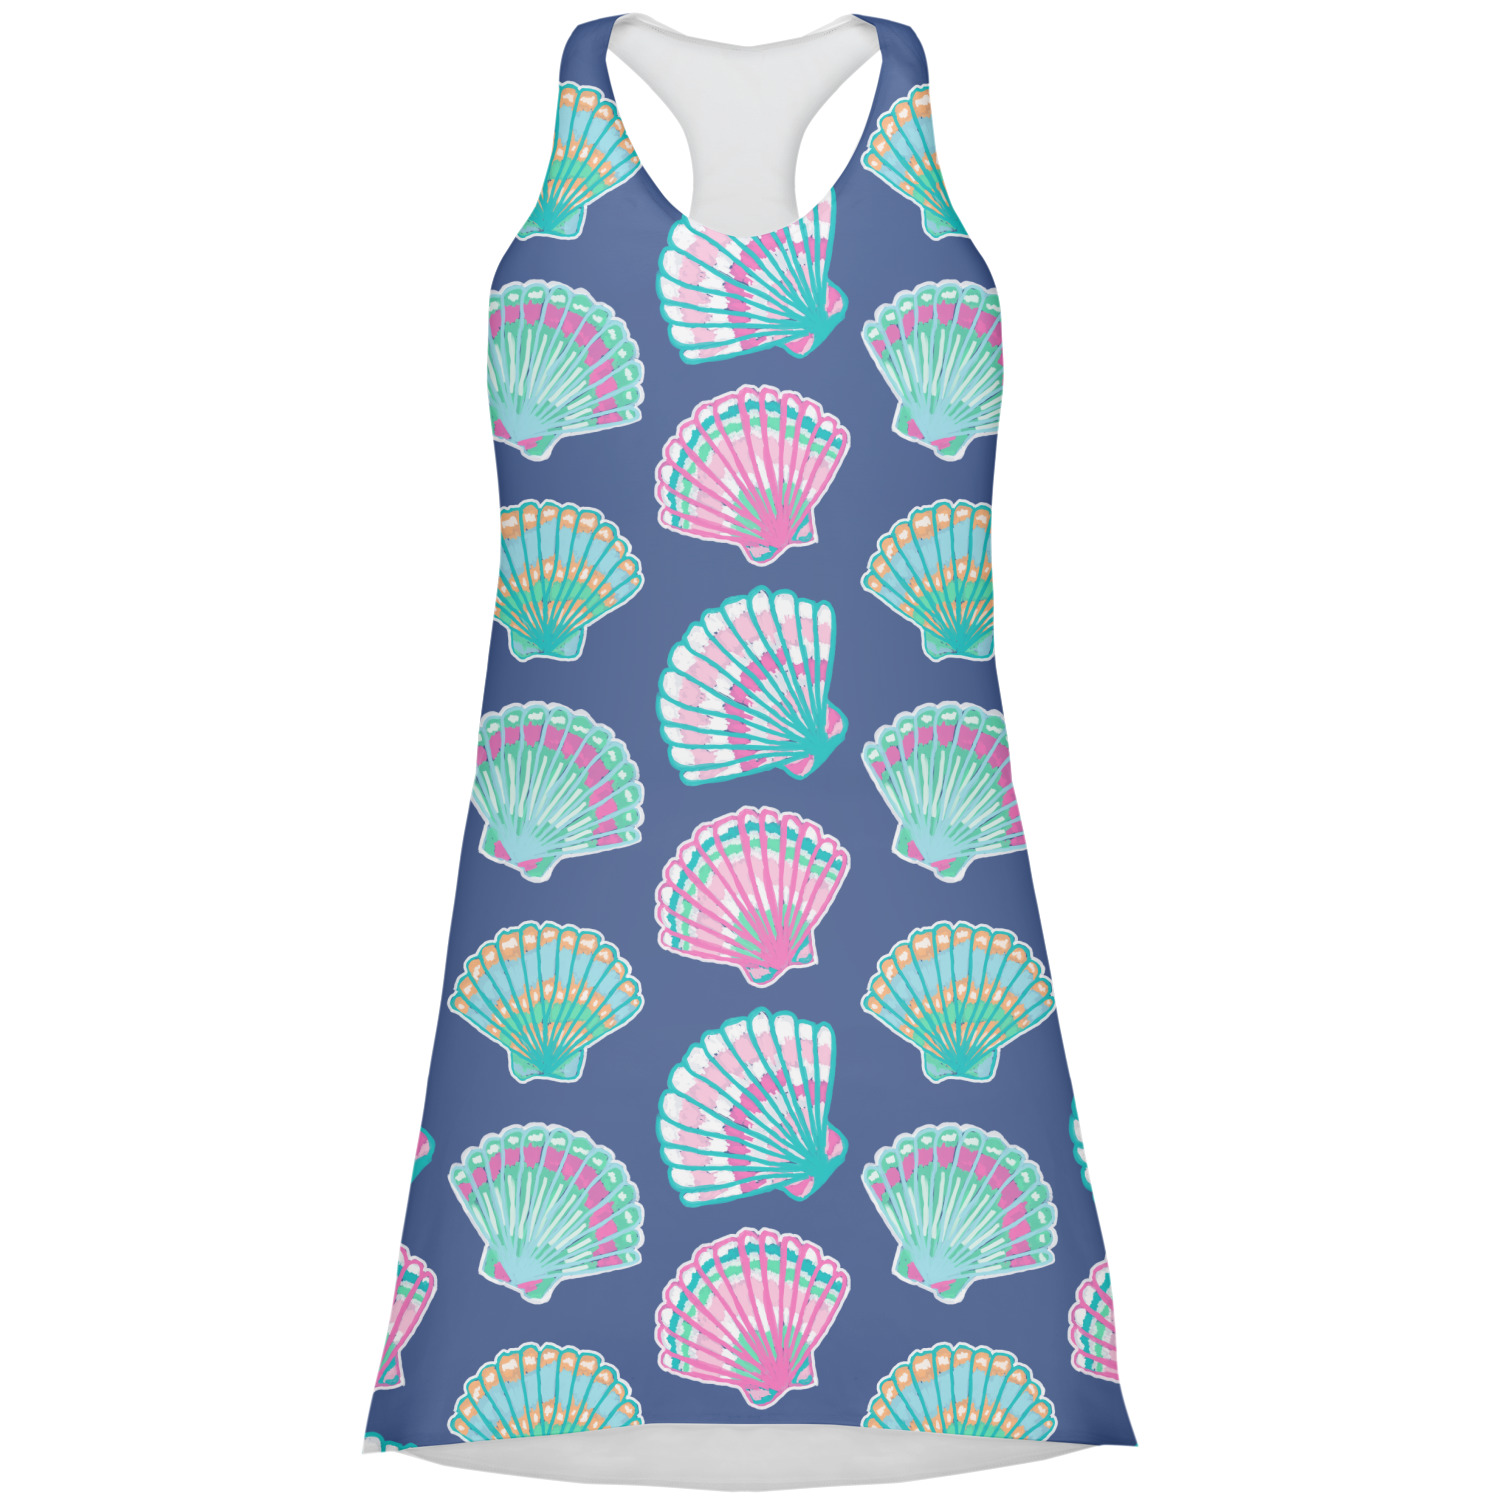 Preppy Sea Shells Racerback Dress (Personalized) - YouCustomizeIt